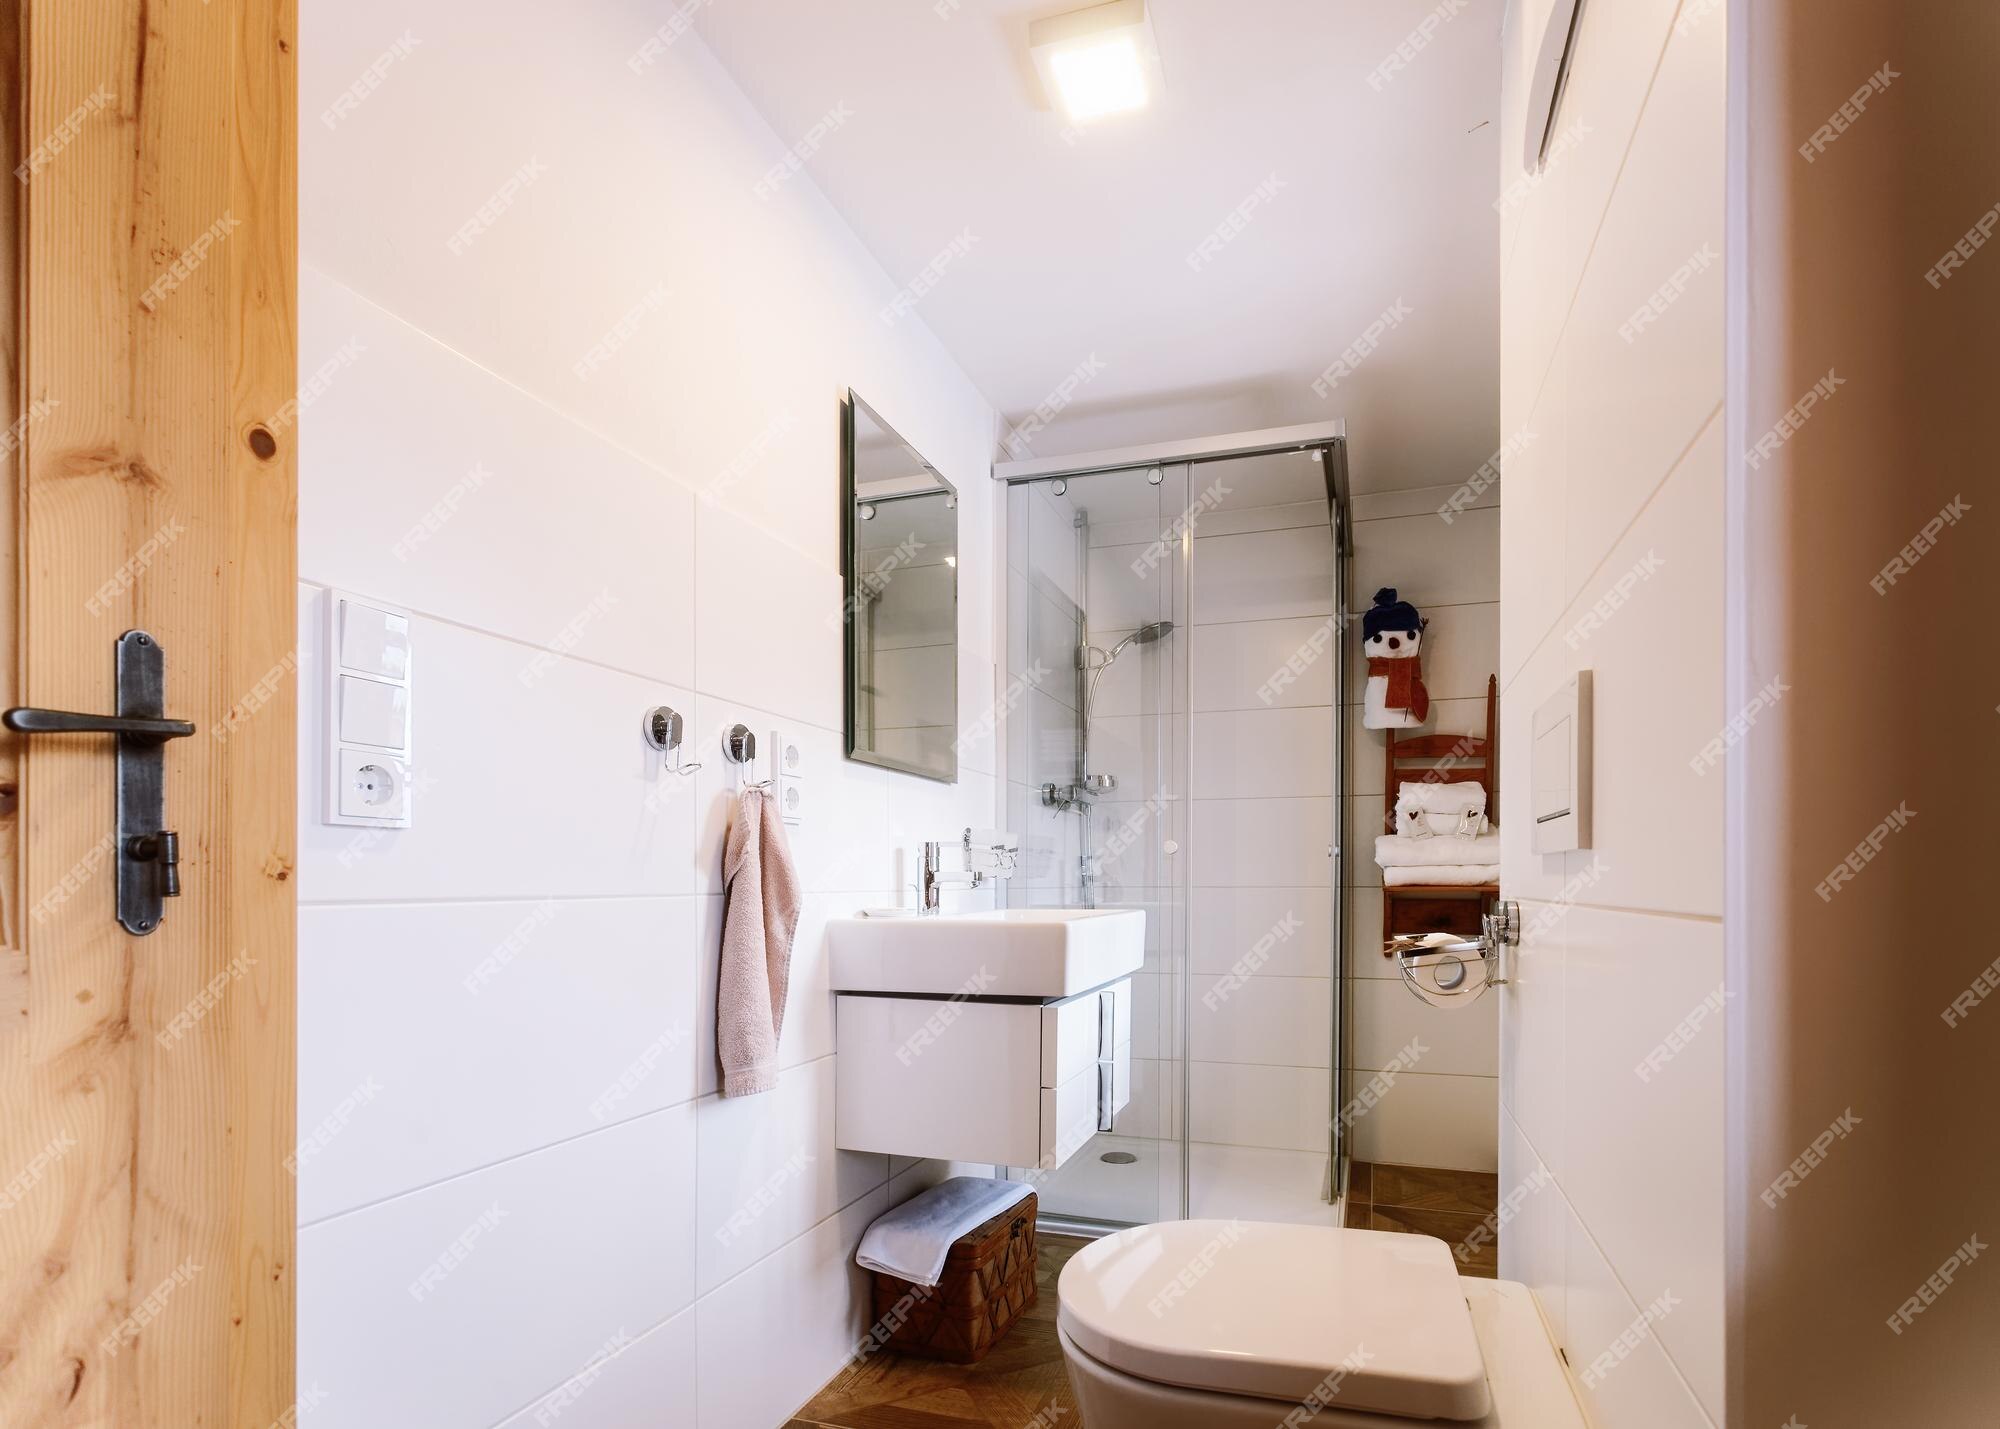 Premium Photo | Interior of modern bathroom with wood design. home ...